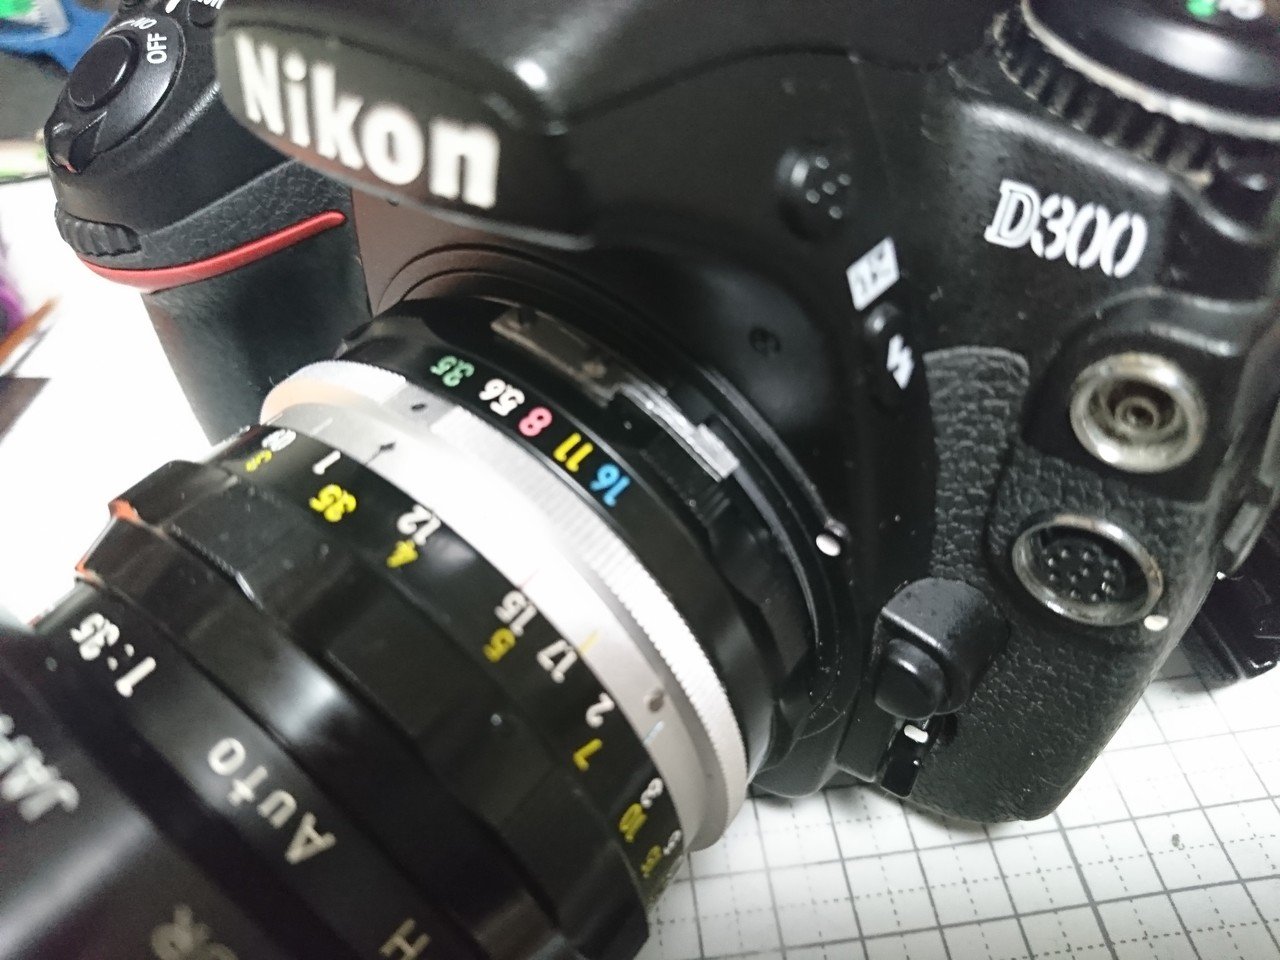 Nikon NIKKOR-H Auto 28mm F3.5 非Ai